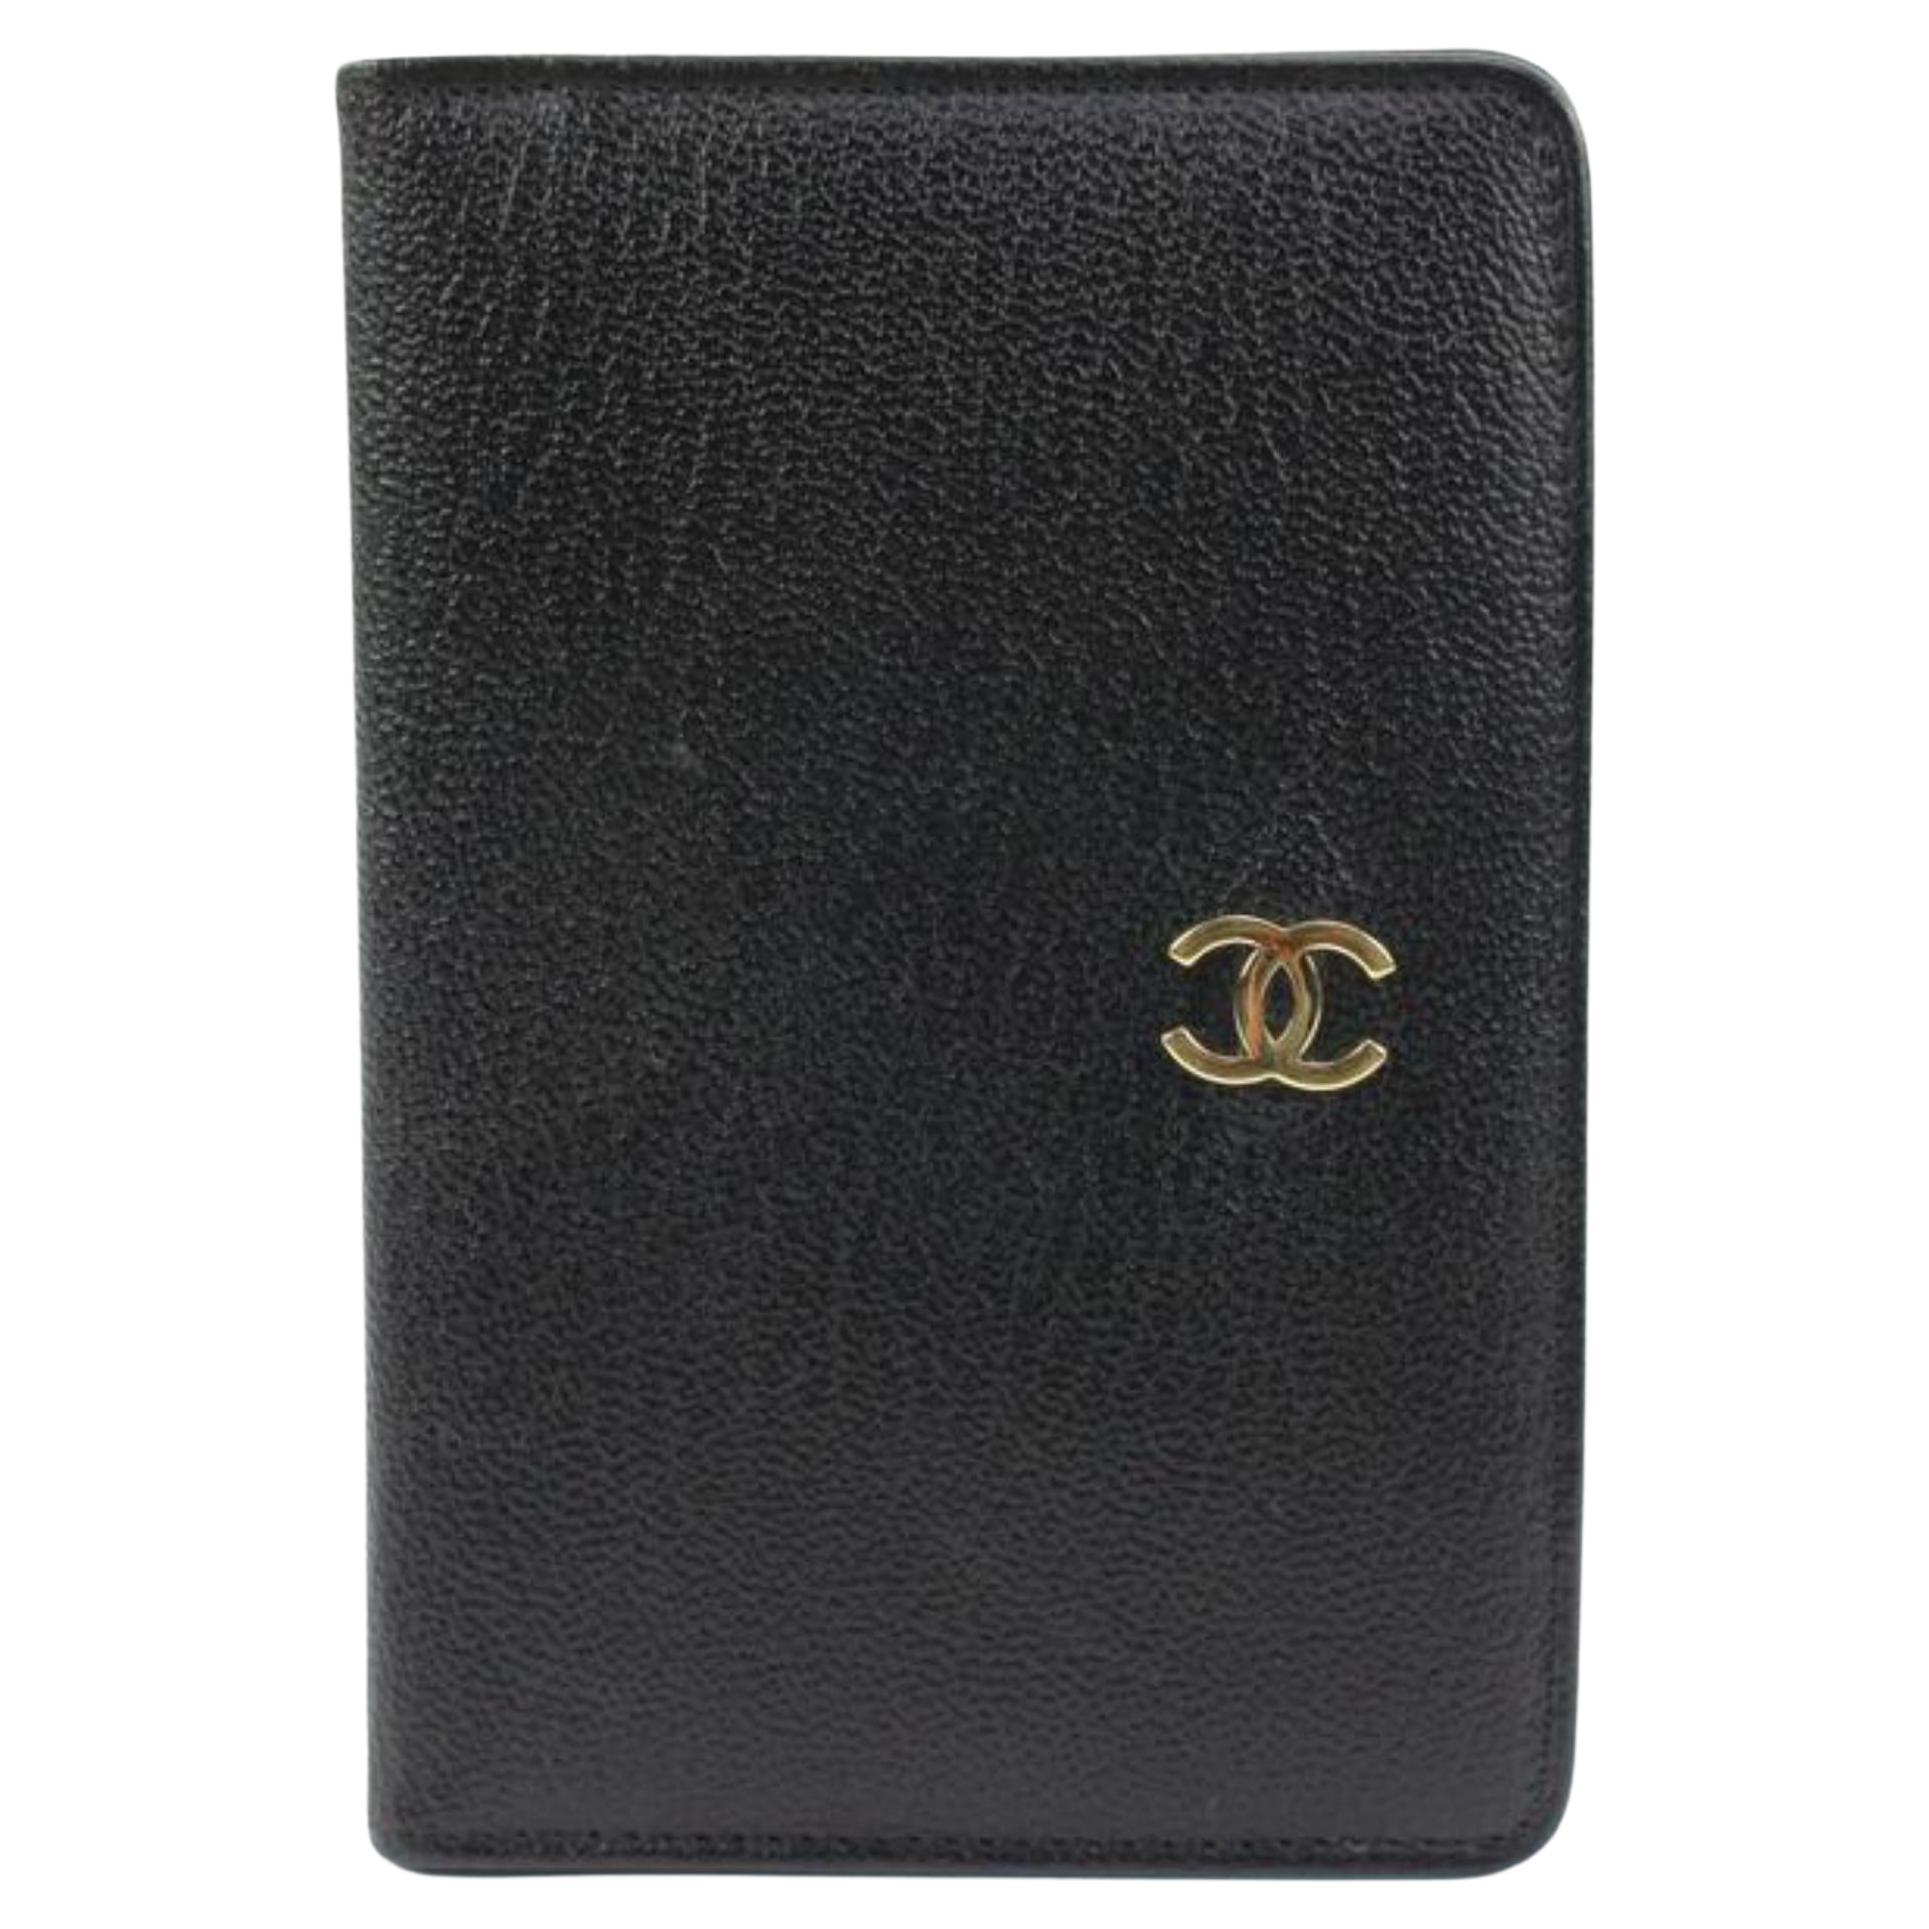 Chanel Black Calfskin Leather CC Card Holder Wallet Case 64ck225s